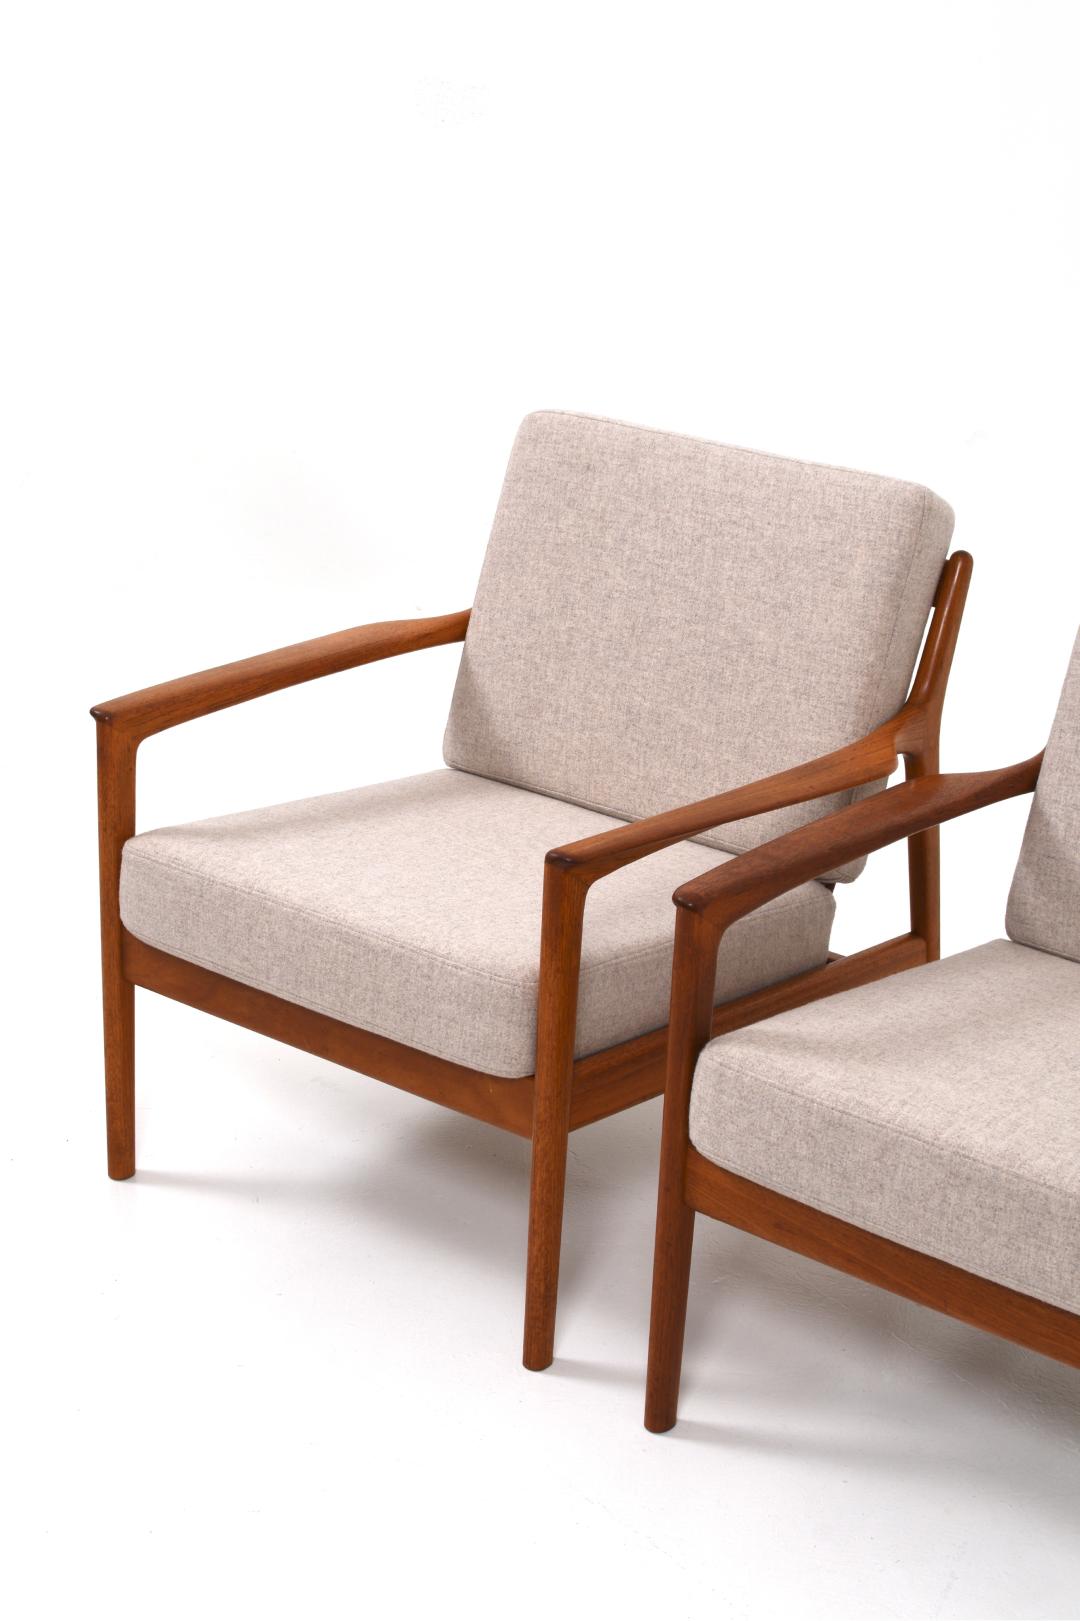 Swedish Teak Lounge Chairs USA 75 Folke Ohlsson by DUX